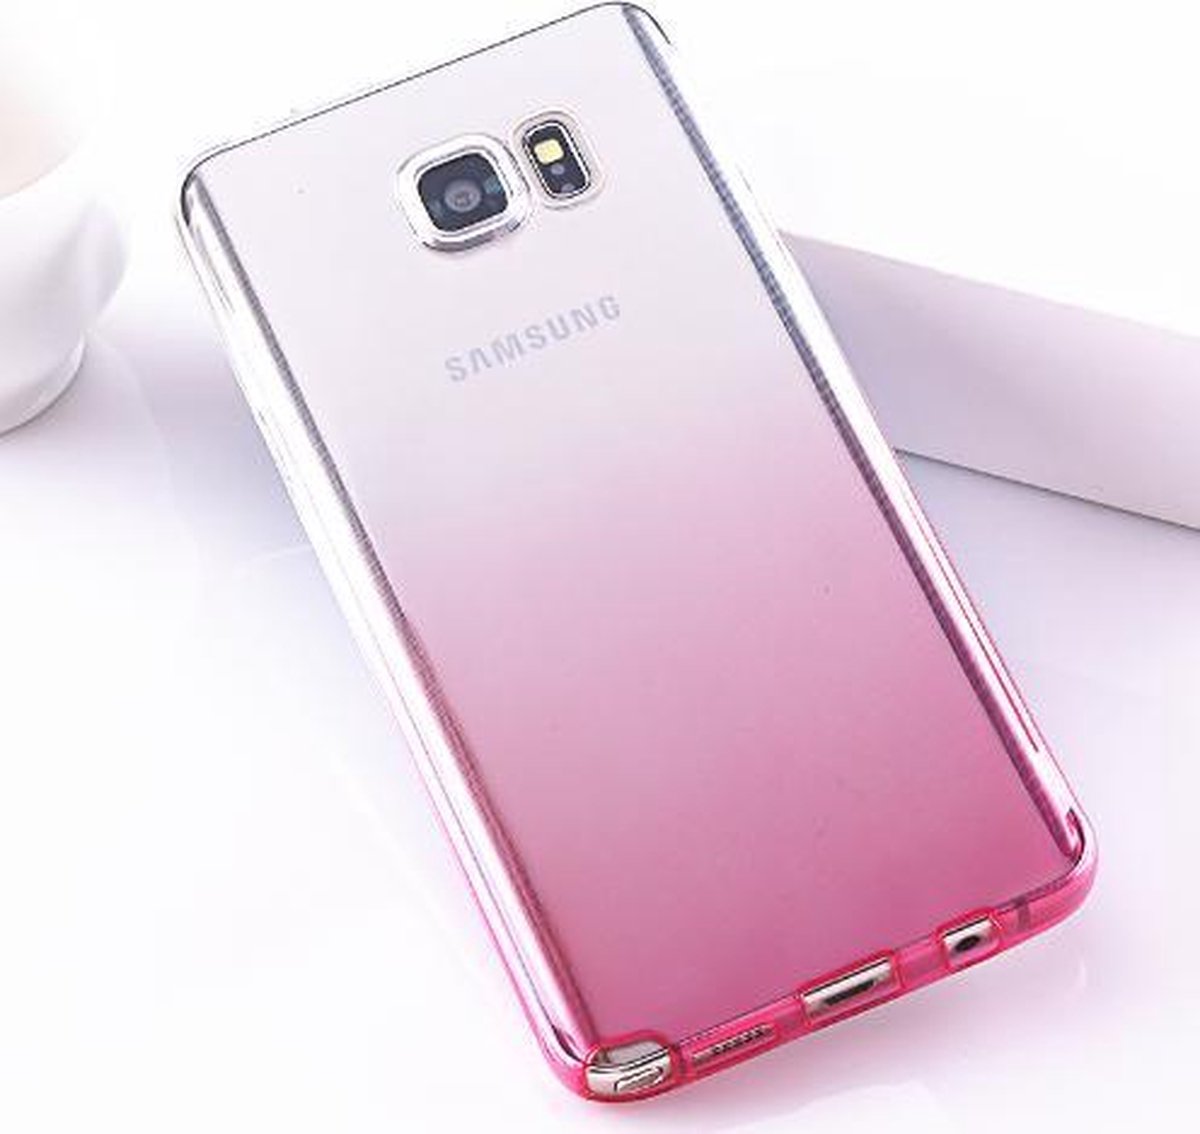 Samsung Galaxy Note 5 Transparant siliconen hoesje (roze)